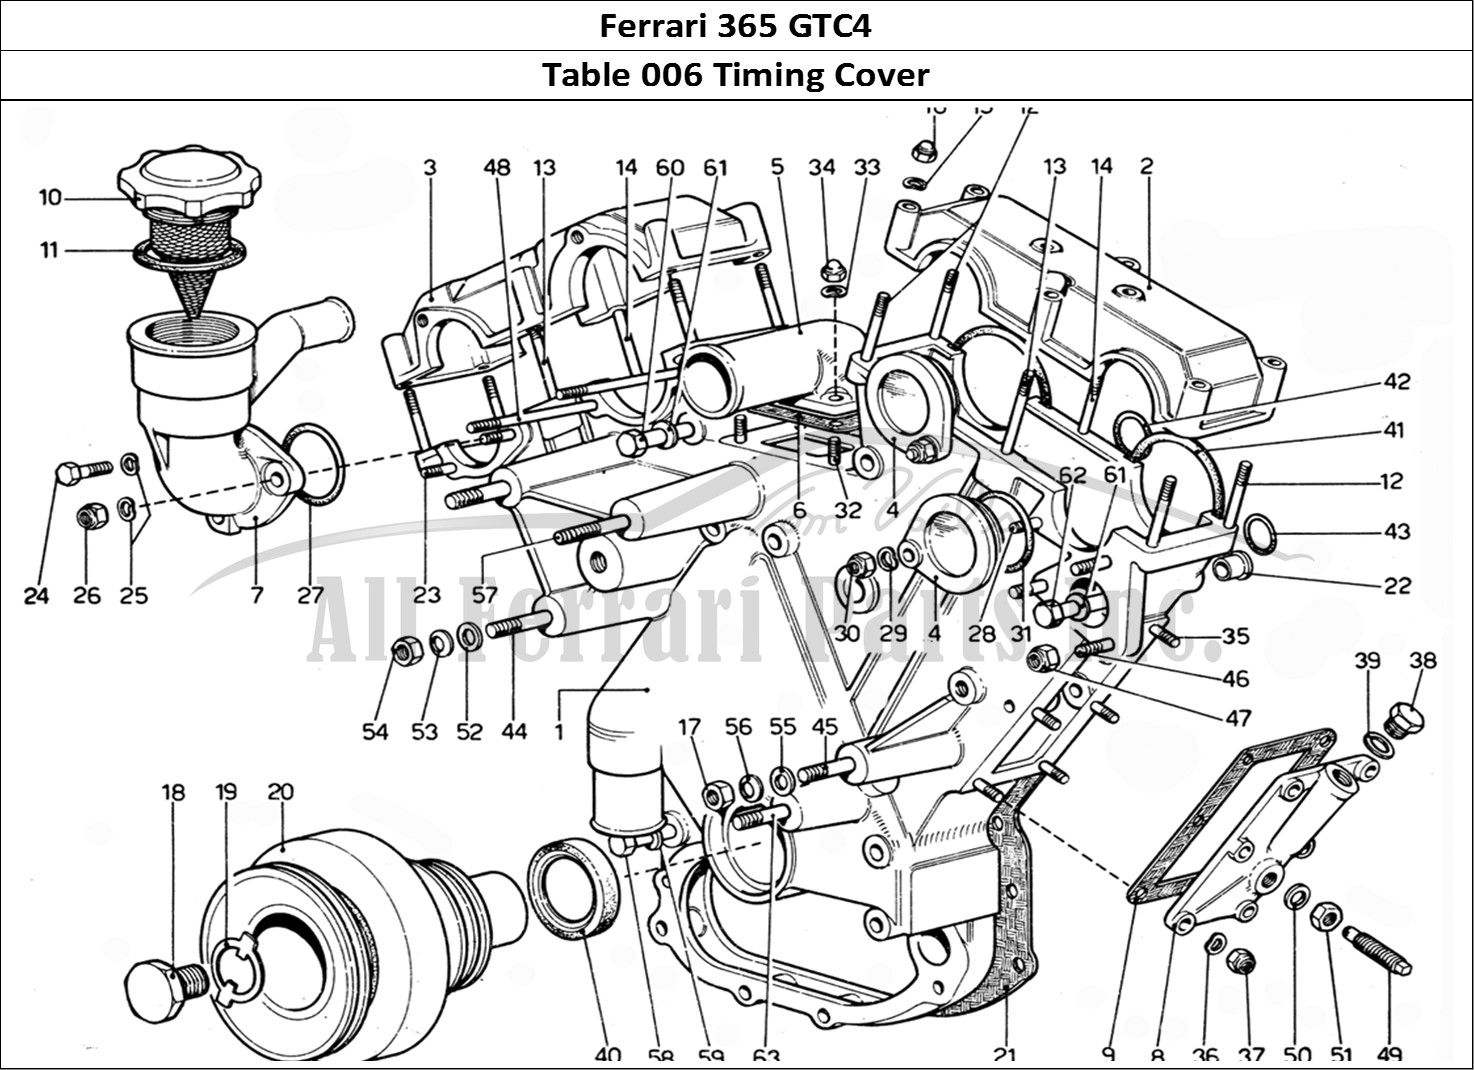 Ferrari Parts Ferrari 365 GTC4 (Mechanical) Page 006 Timing chest cover